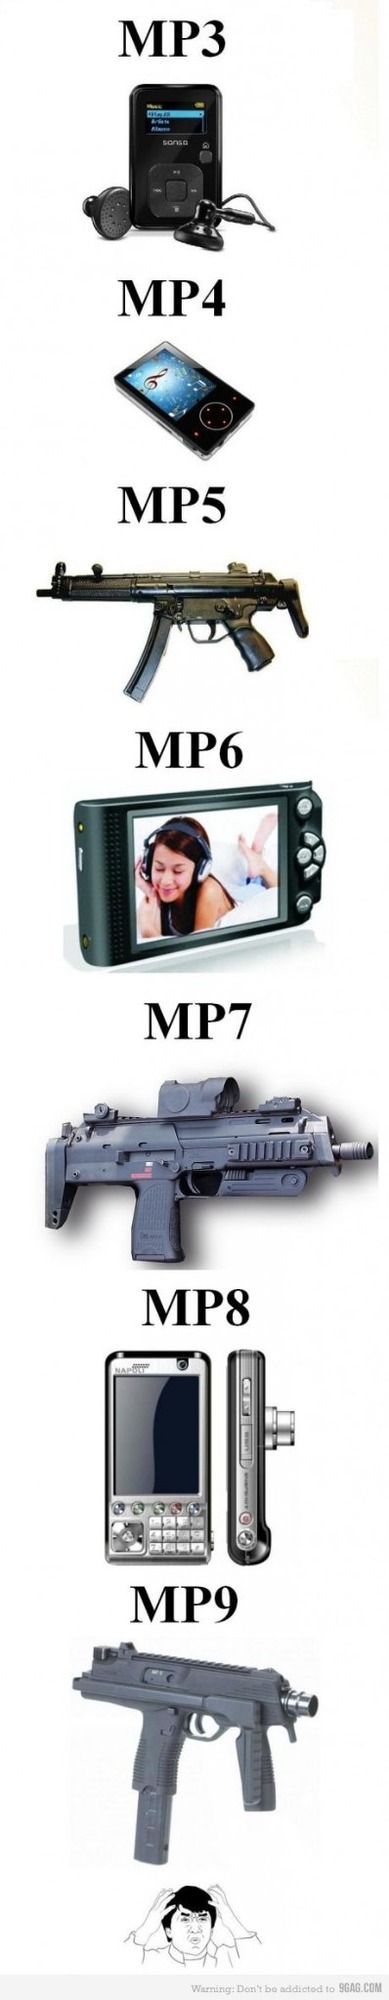 Mp5 - meme